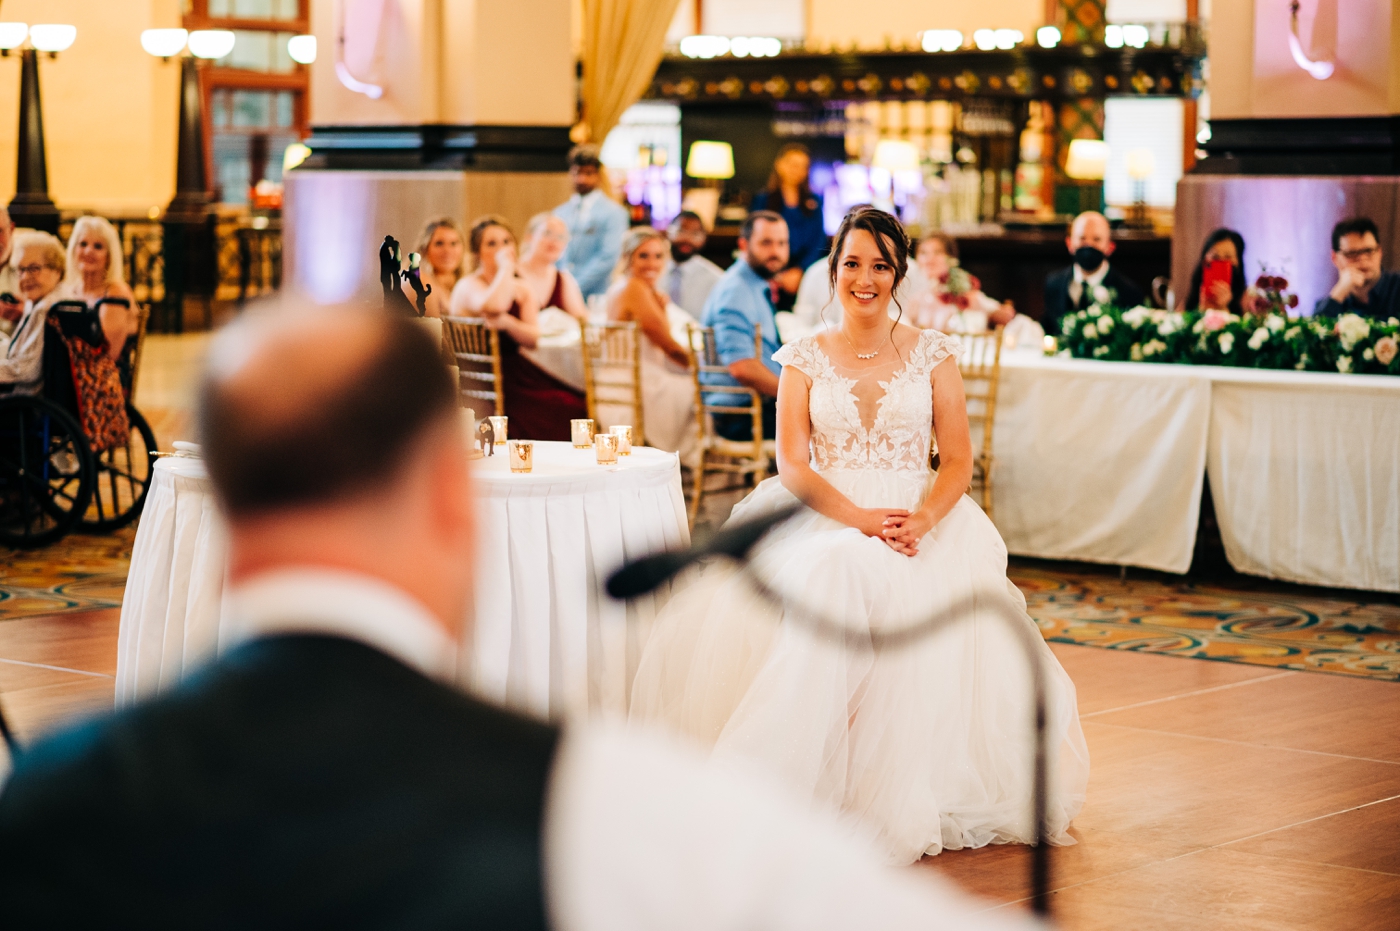 Groom serenading bride during wedding reception at Union Station